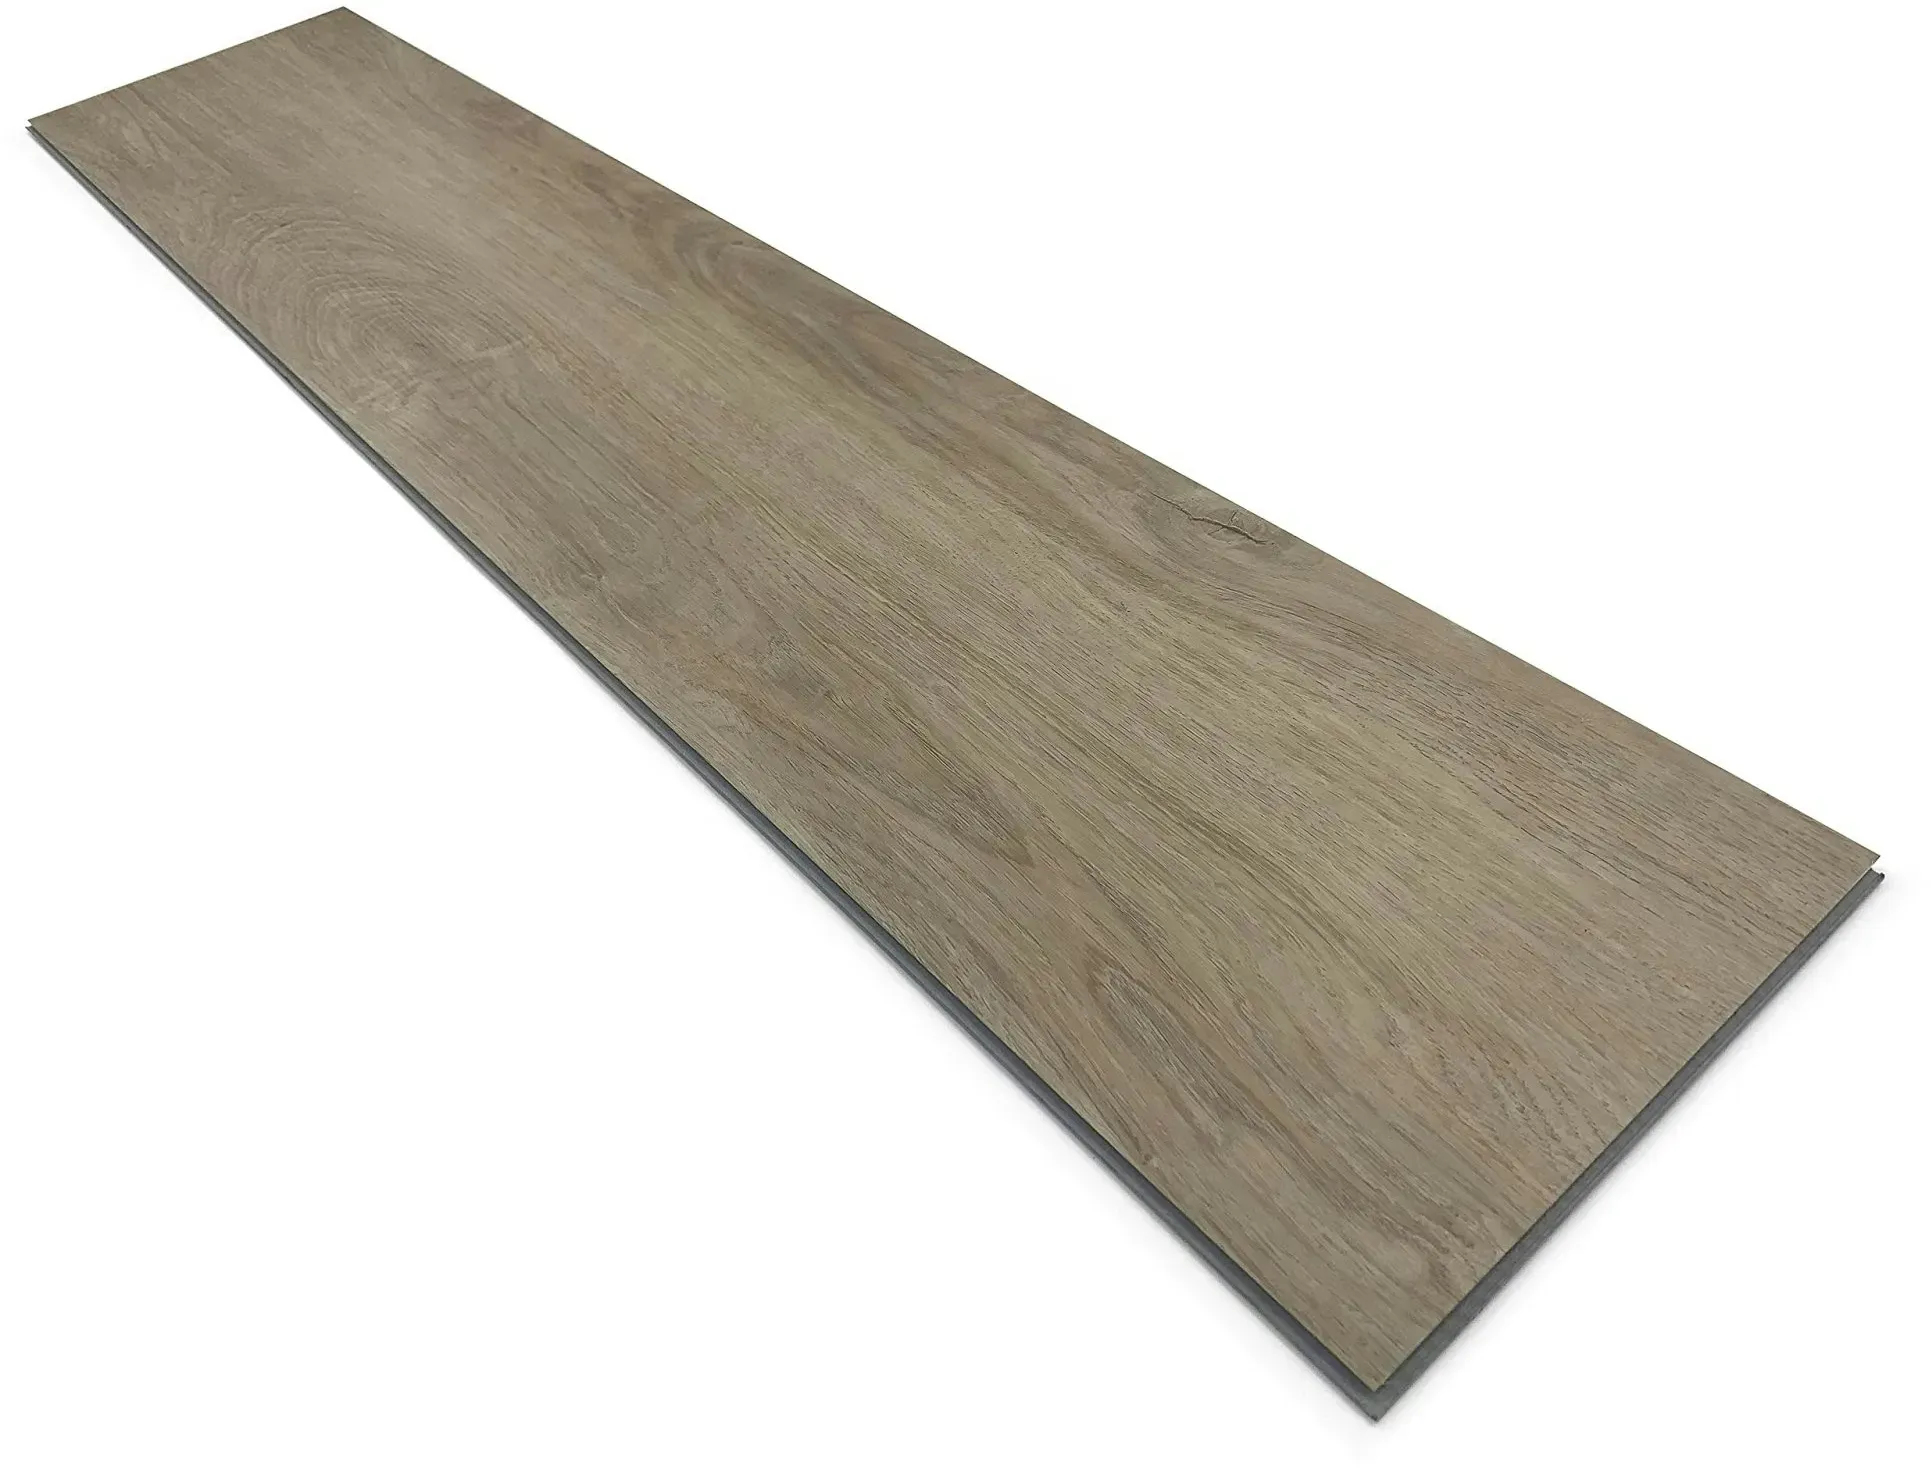 Merax SPC Vinyl Boden PVC Klick Bodenbelag Vinyl-Designboden Massivdiele 5 mm stark,0,5 mm Nutzschicht,Fußbodenheizung geeignet 2.554m2-Braun